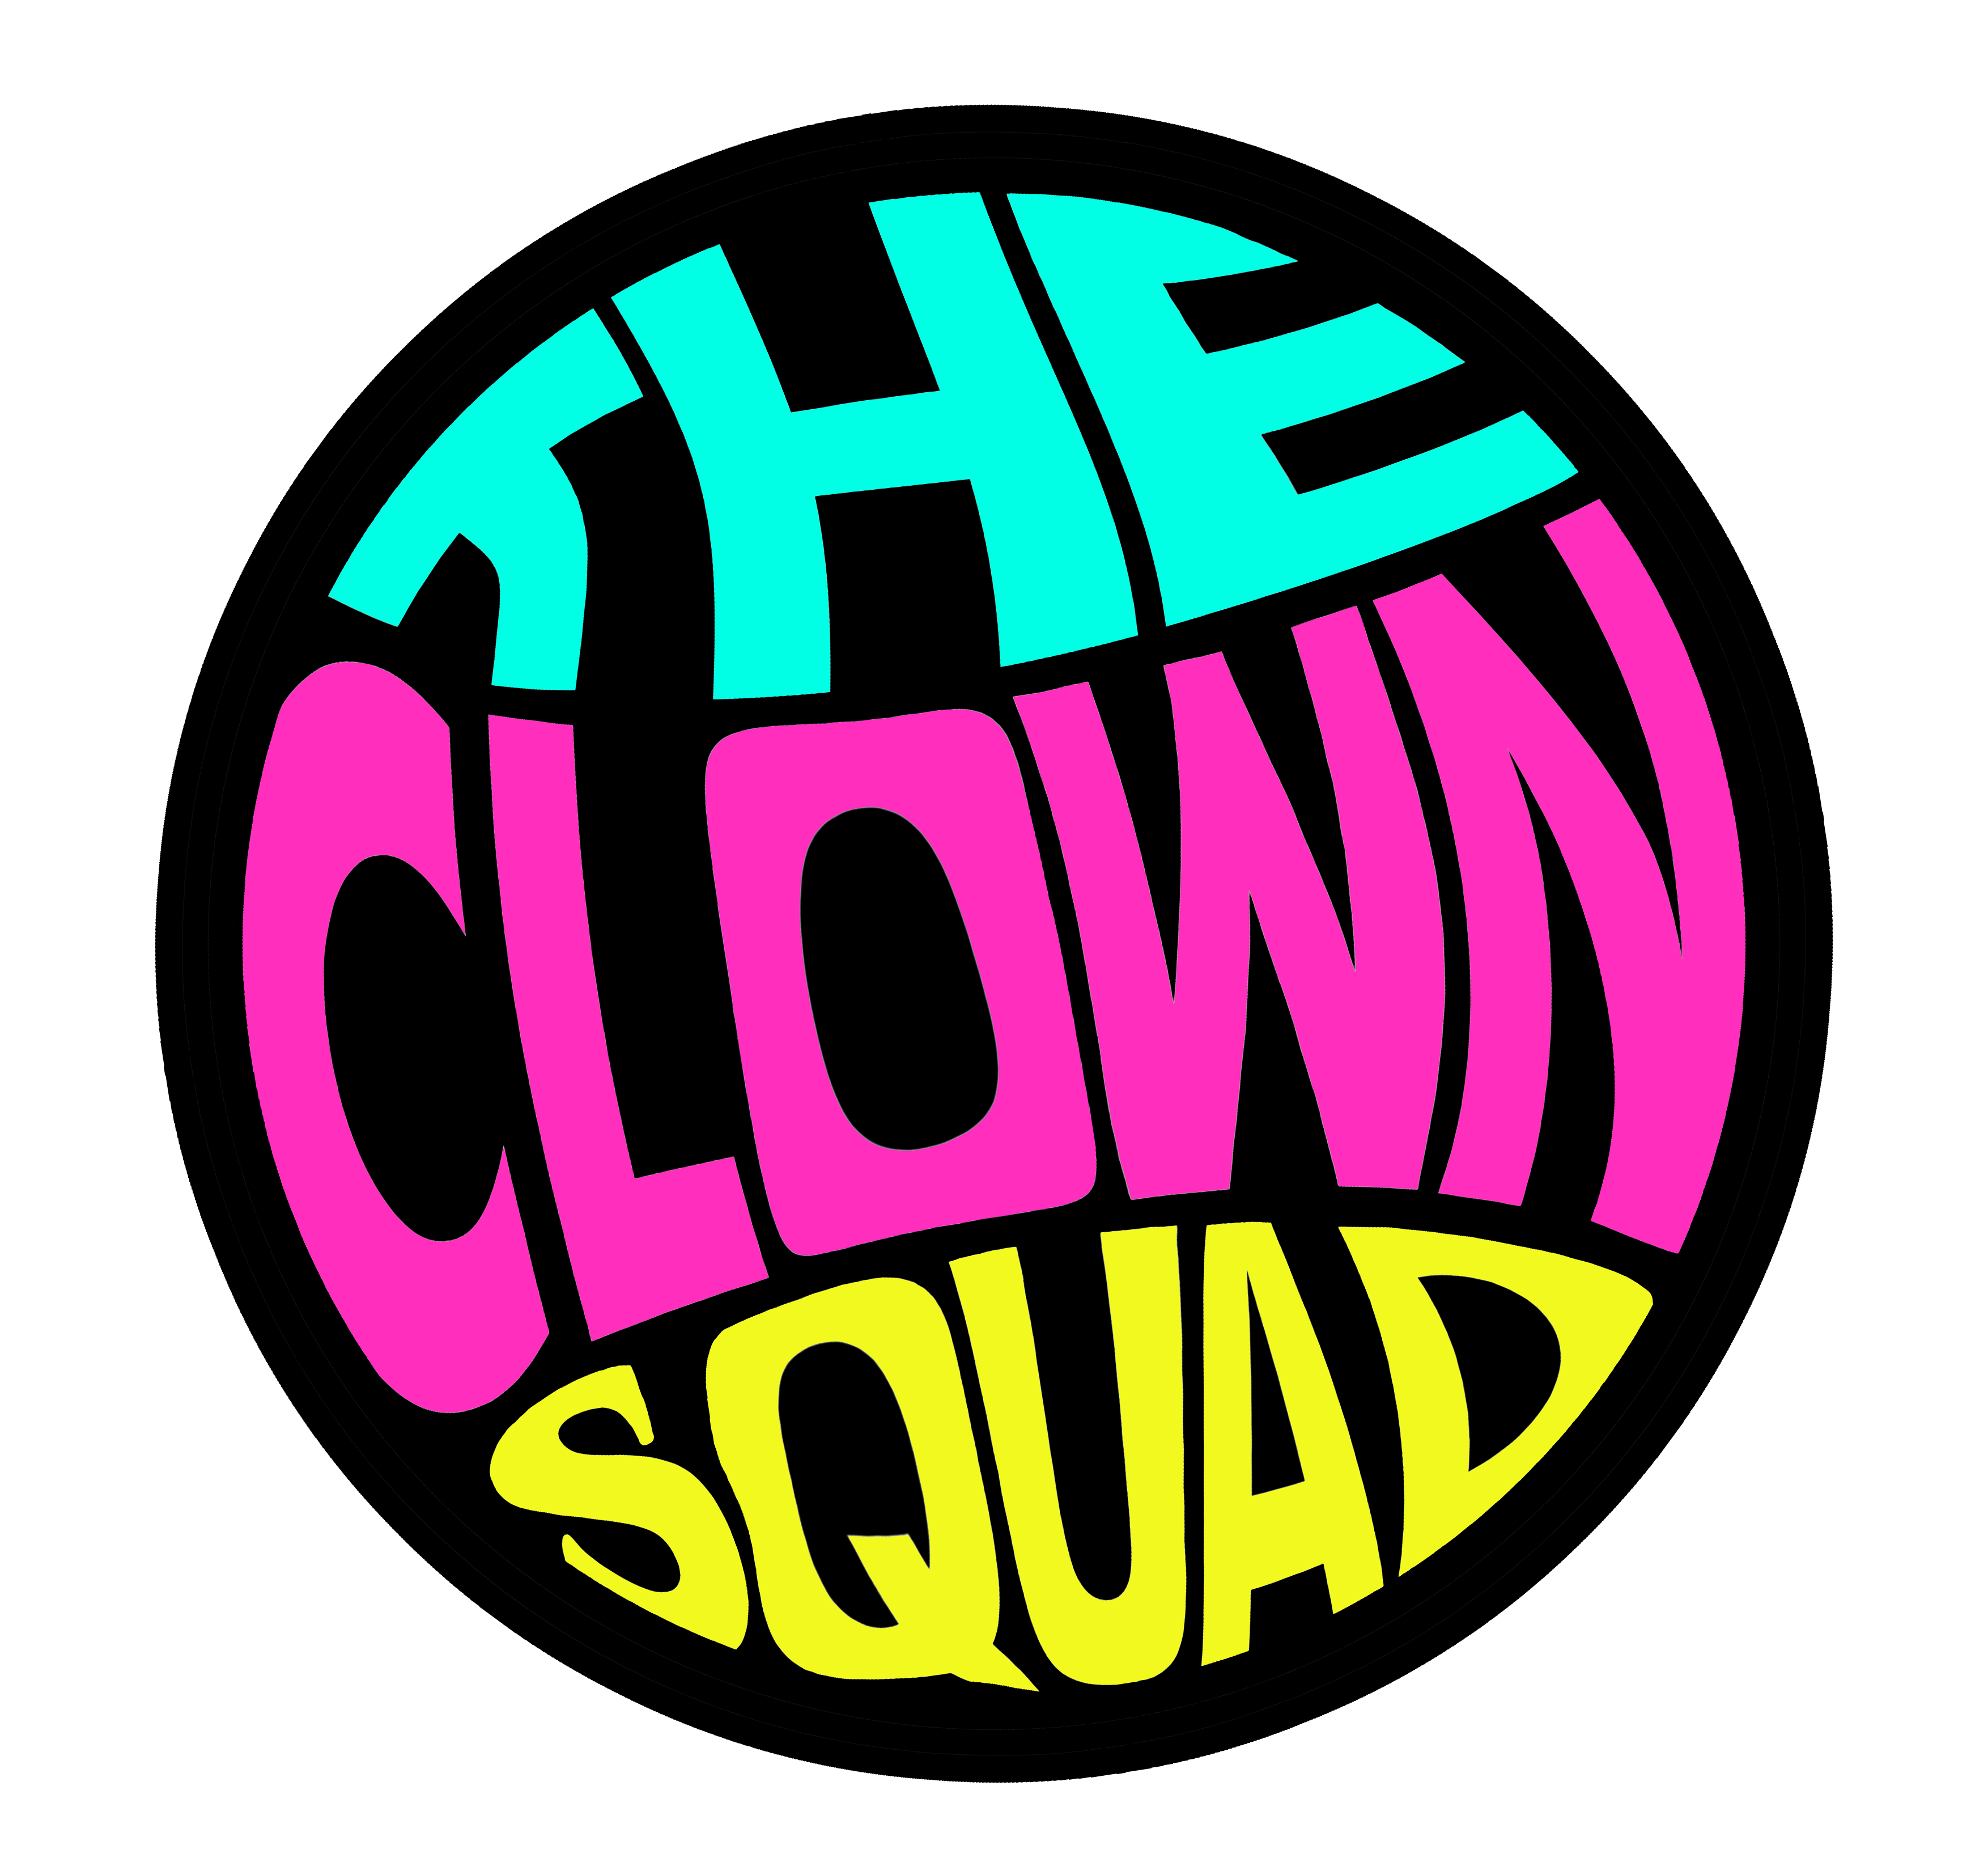 The Clown Squad